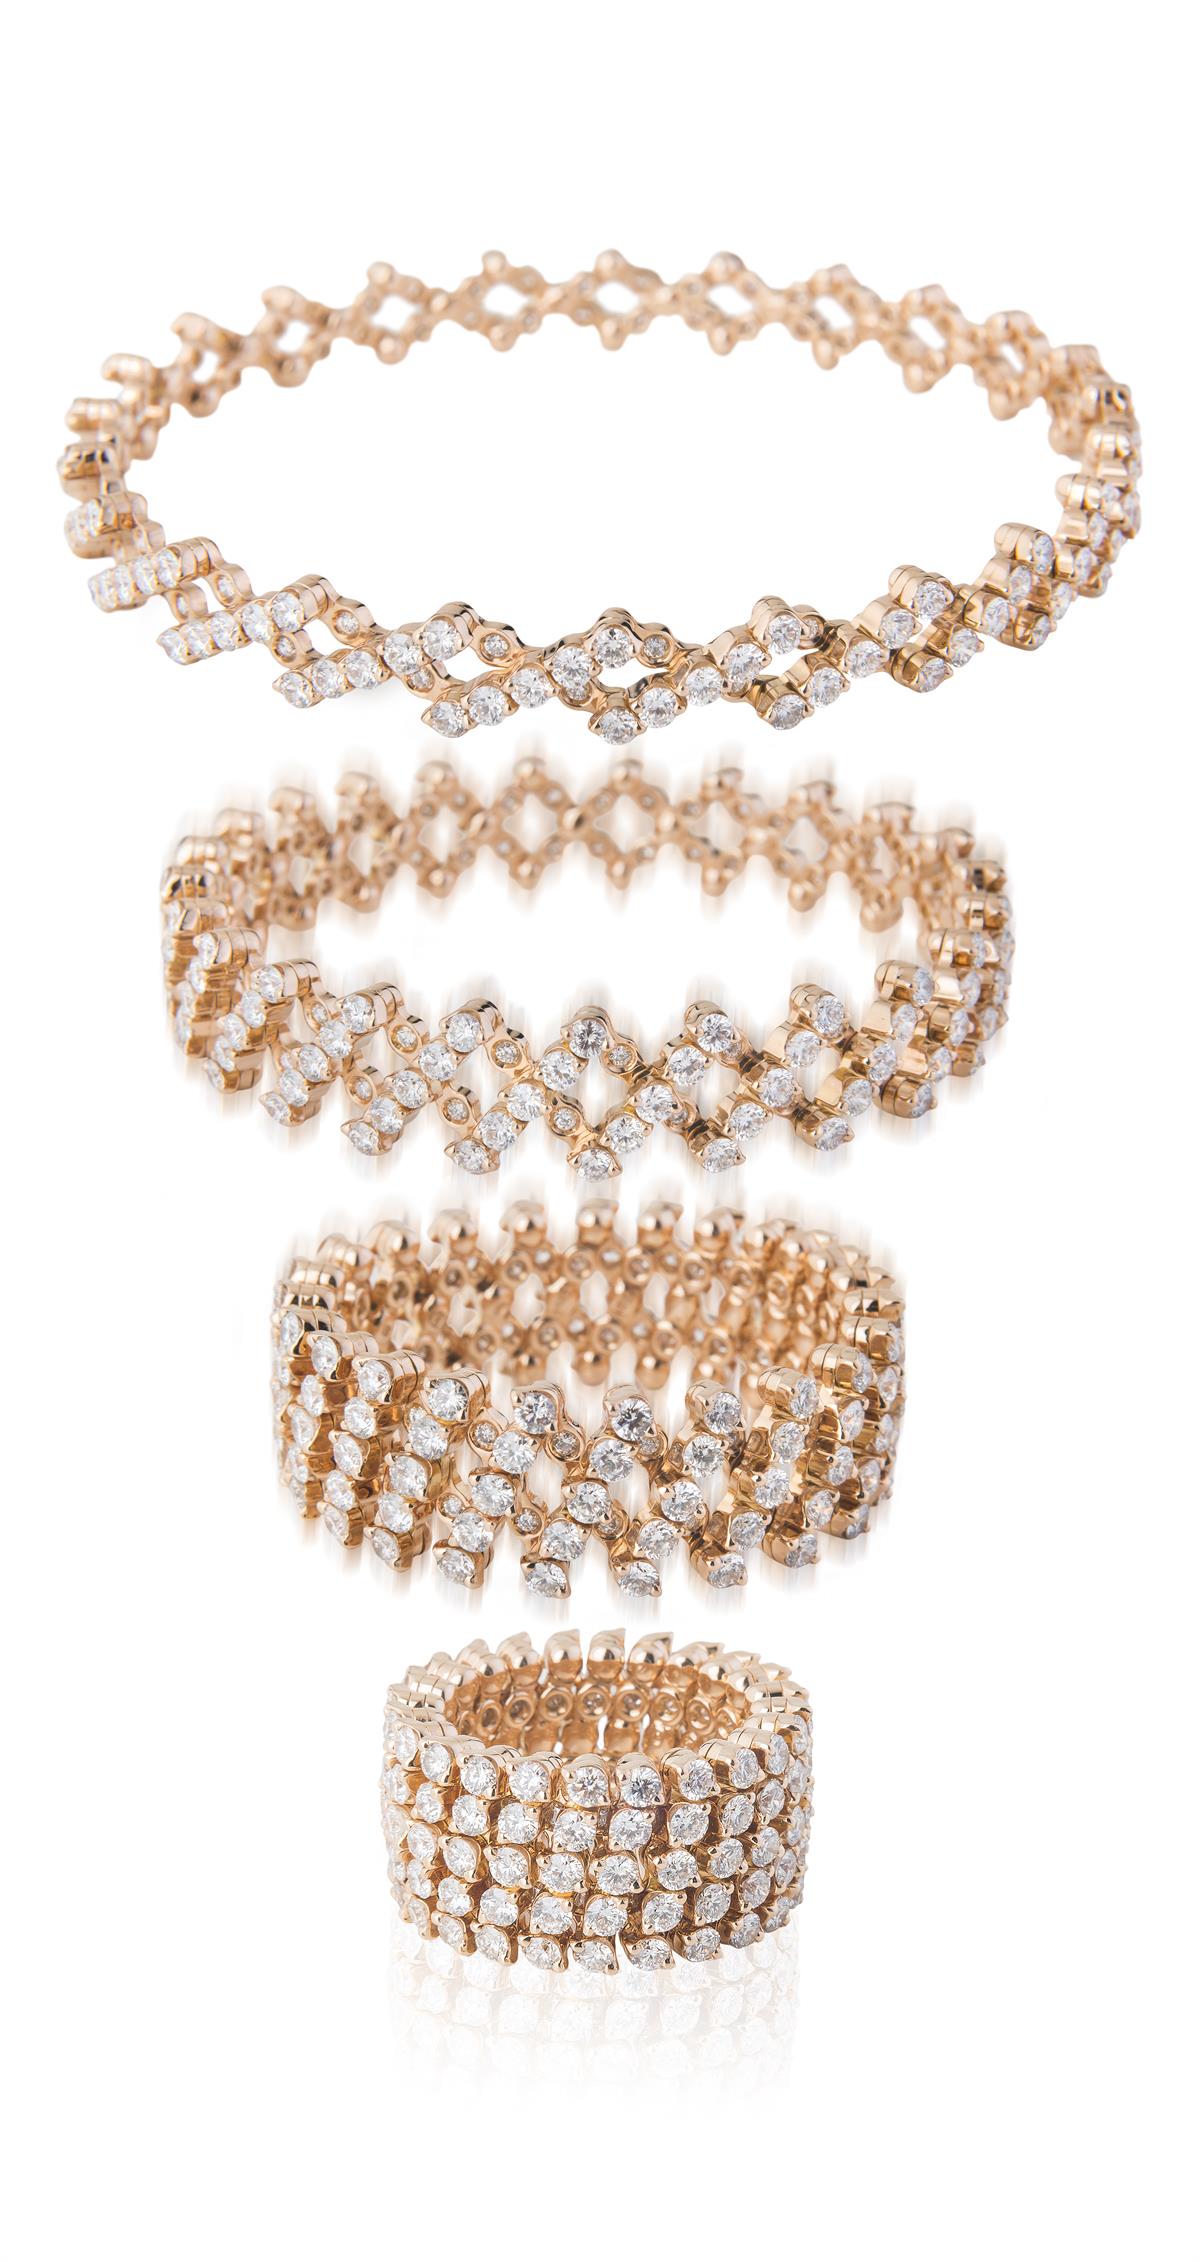 Juwelier Kruzik - Michael Kruzik Luxury Concept_Serafino Consoli_Multisize Ring-Armband_Preis auf Anfrage 